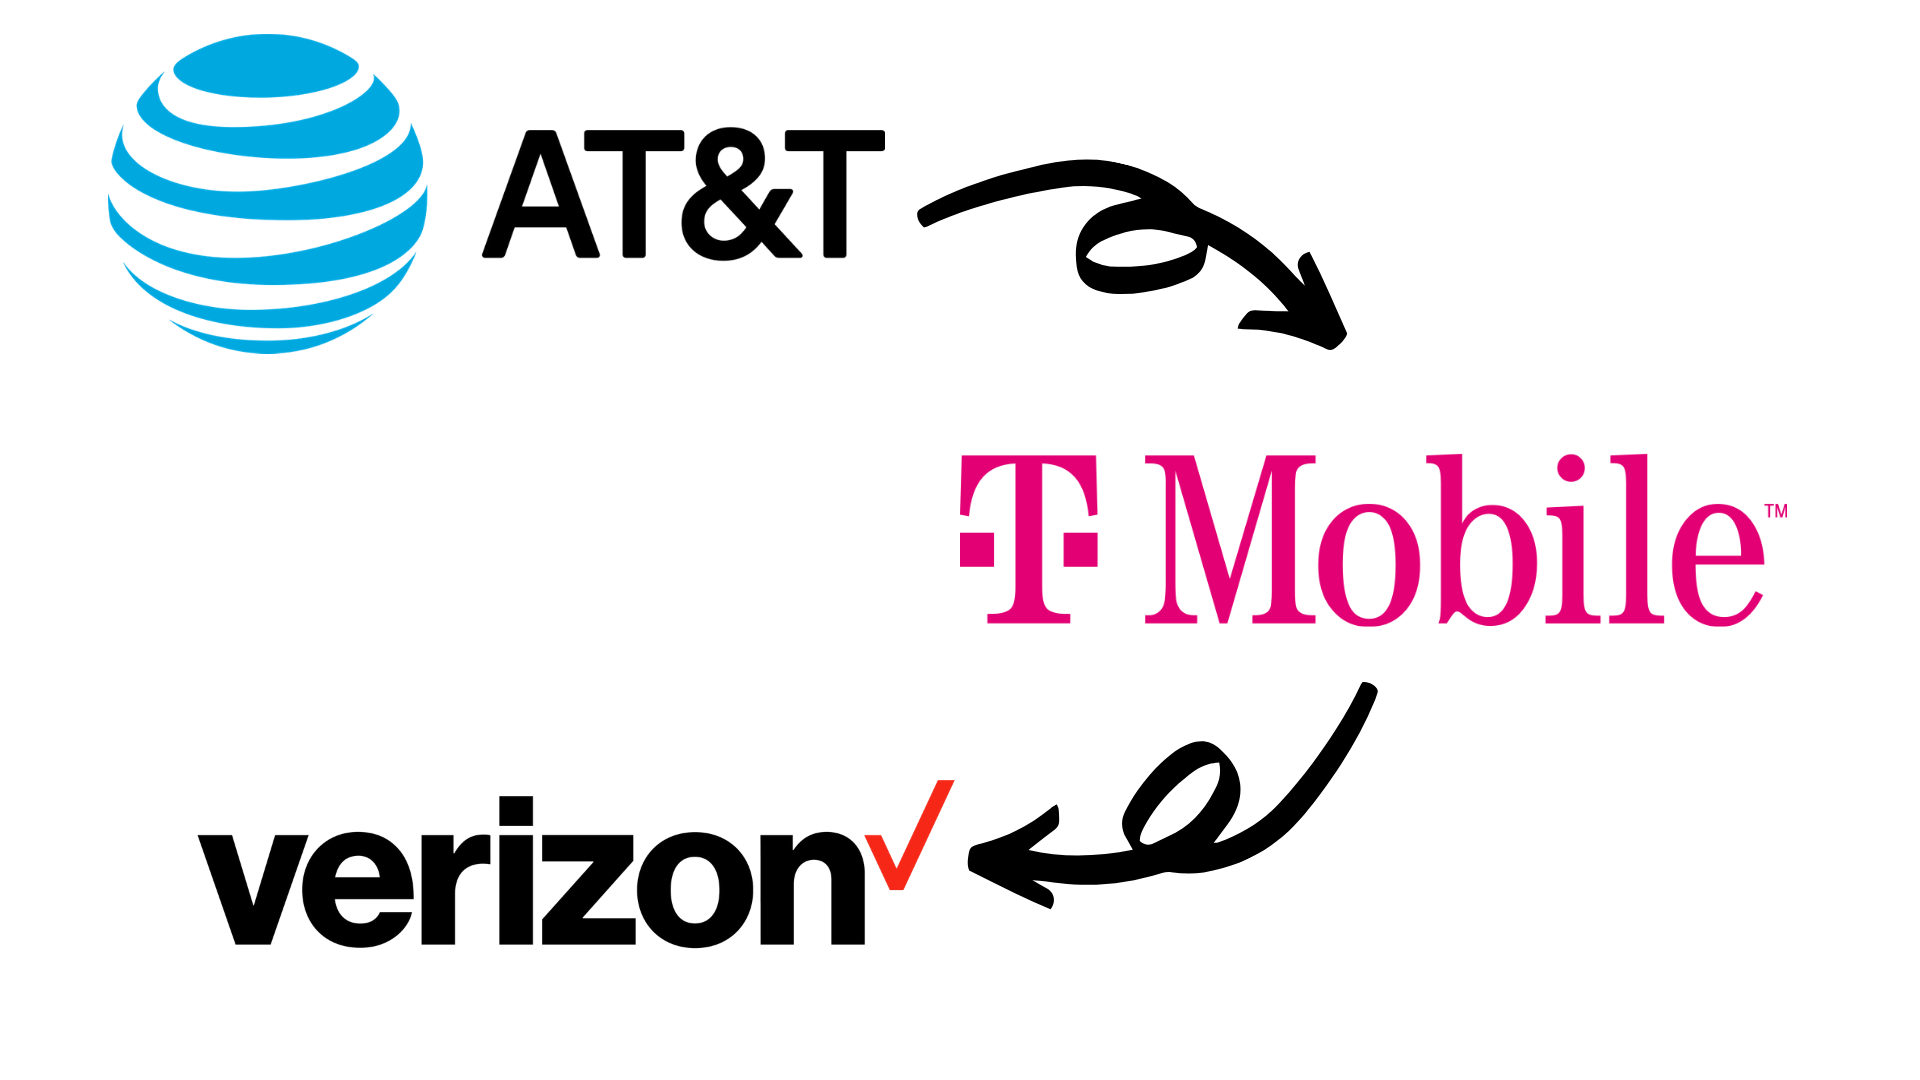 US phone company logo graphic